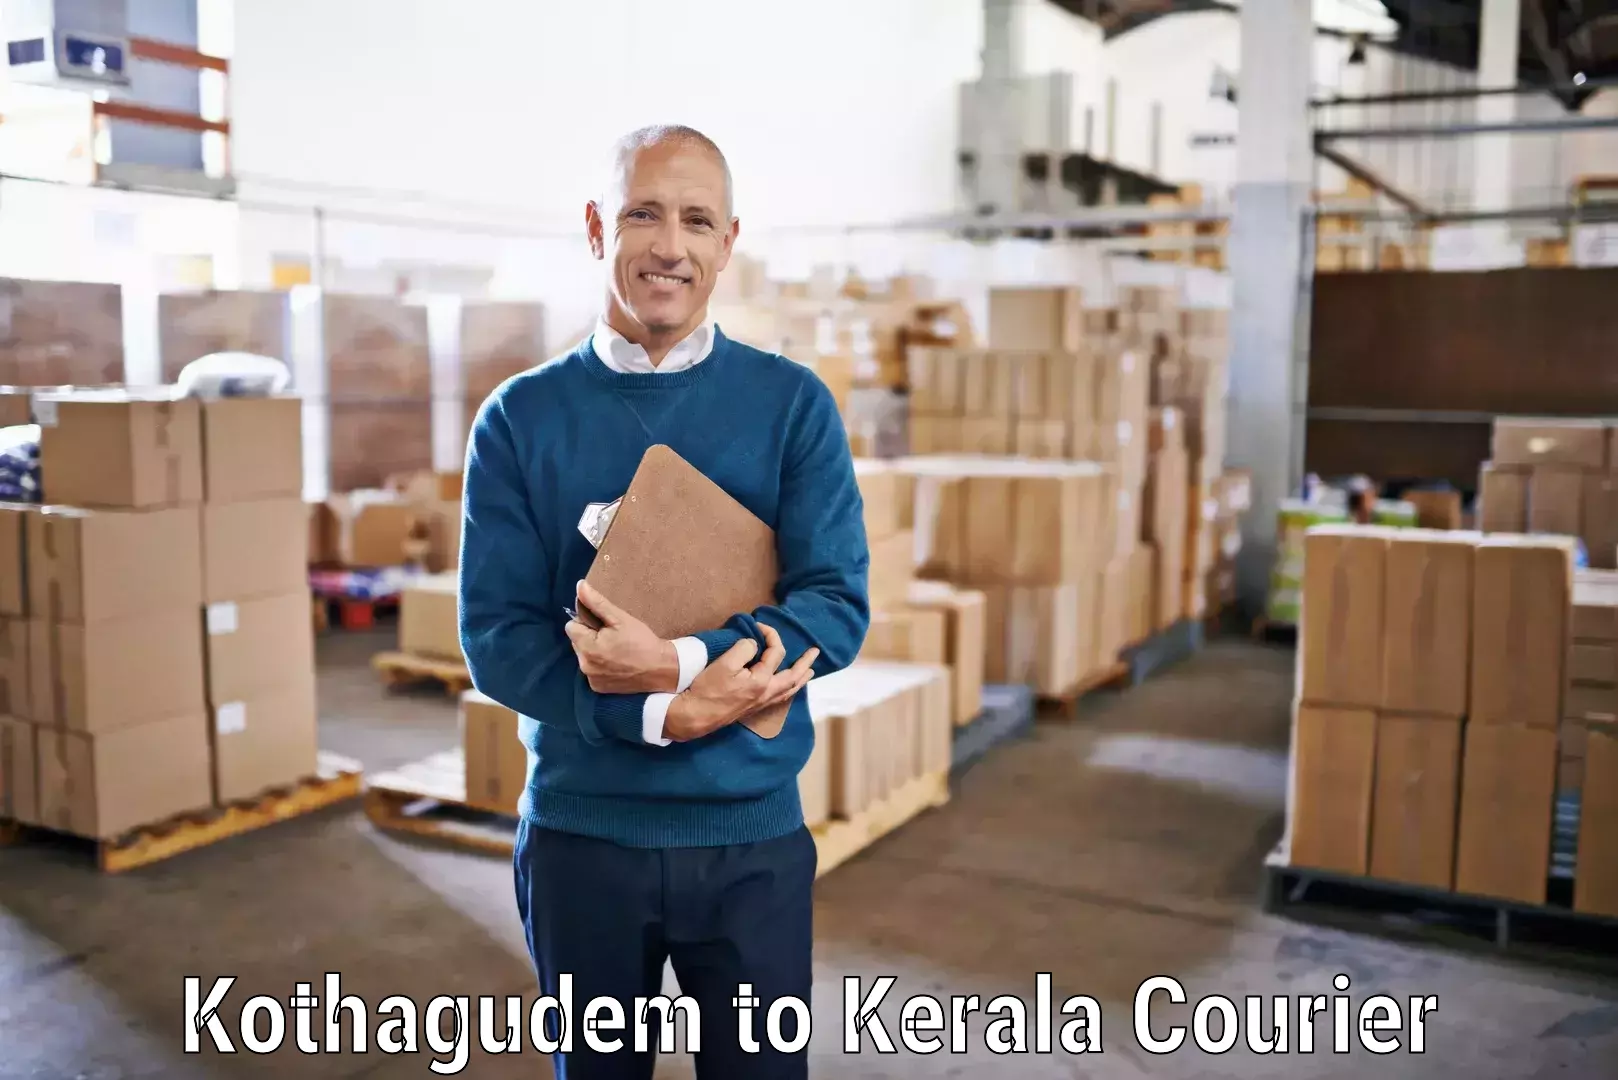 Nationwide shipping capabilities Kothagudem to Kerala